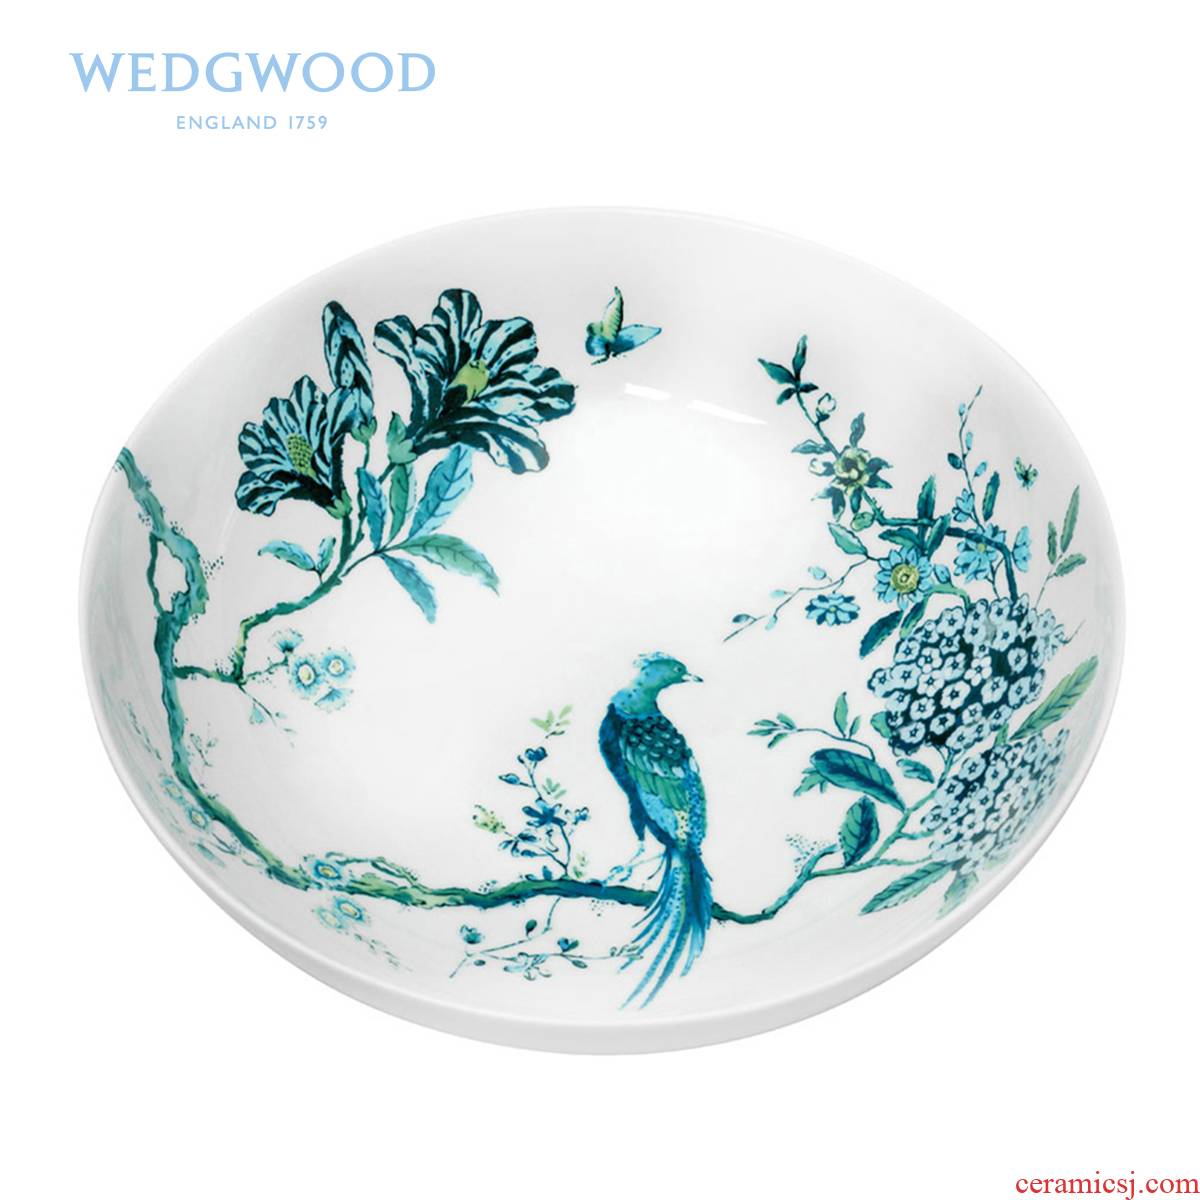 British Wedgwood waterford Wedgwood Jasper conran Chinese wind 30 cm white ipads China big bucket